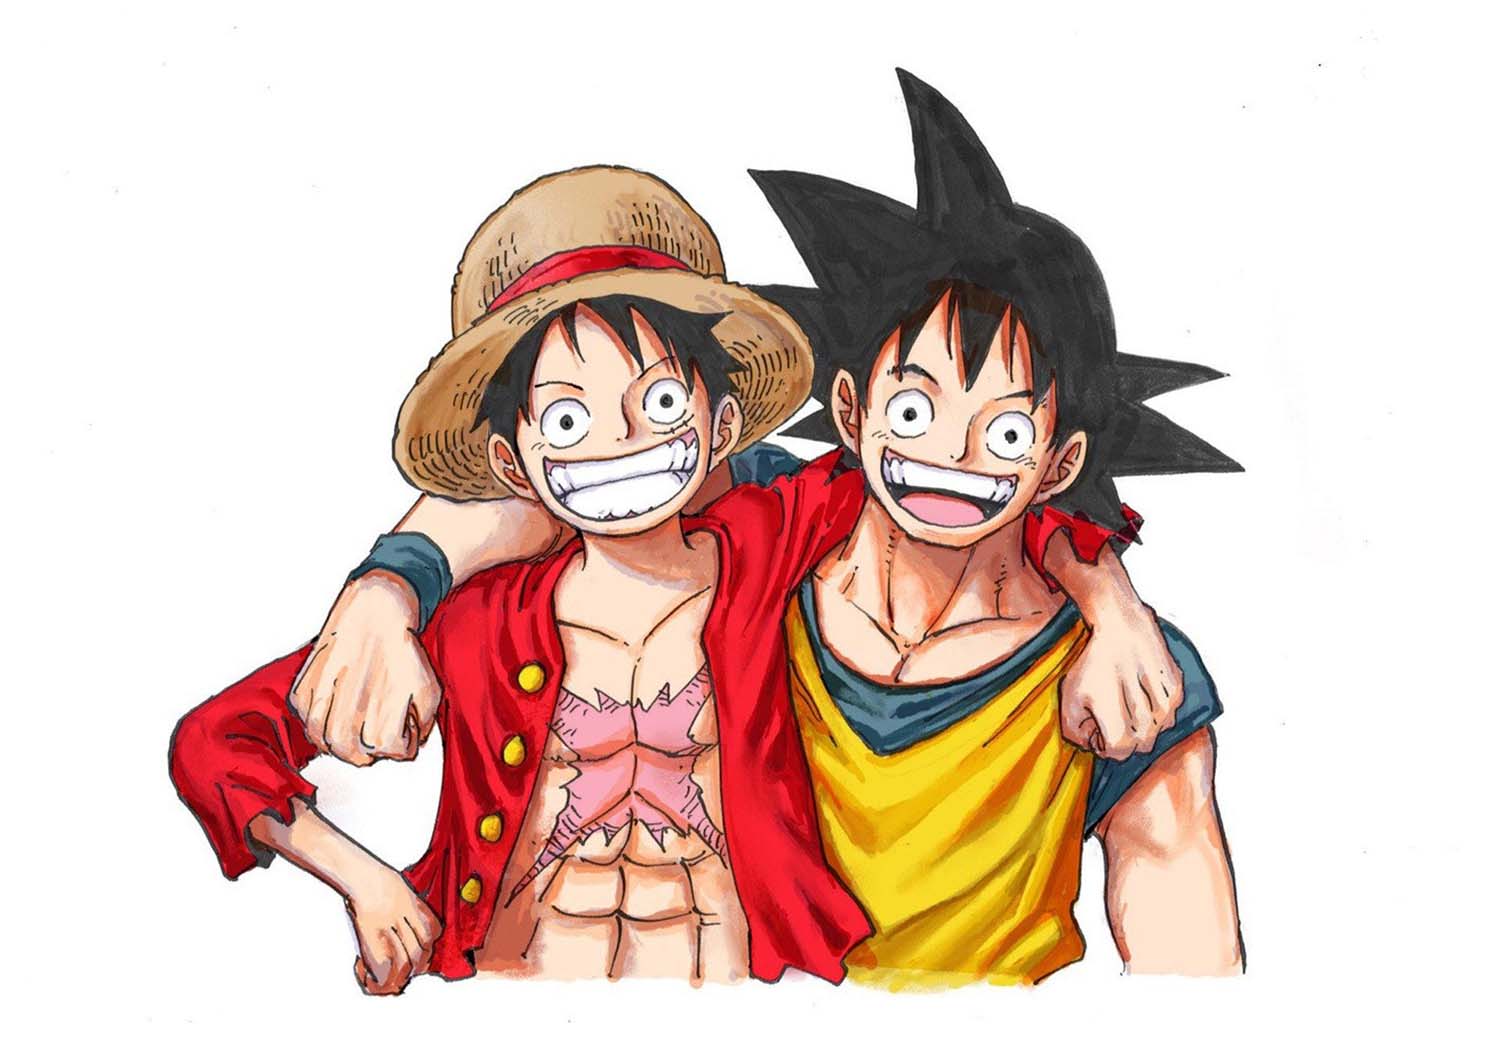 Luffy (gauche) et Goku (droite) dessinés par Eiichiro Oda